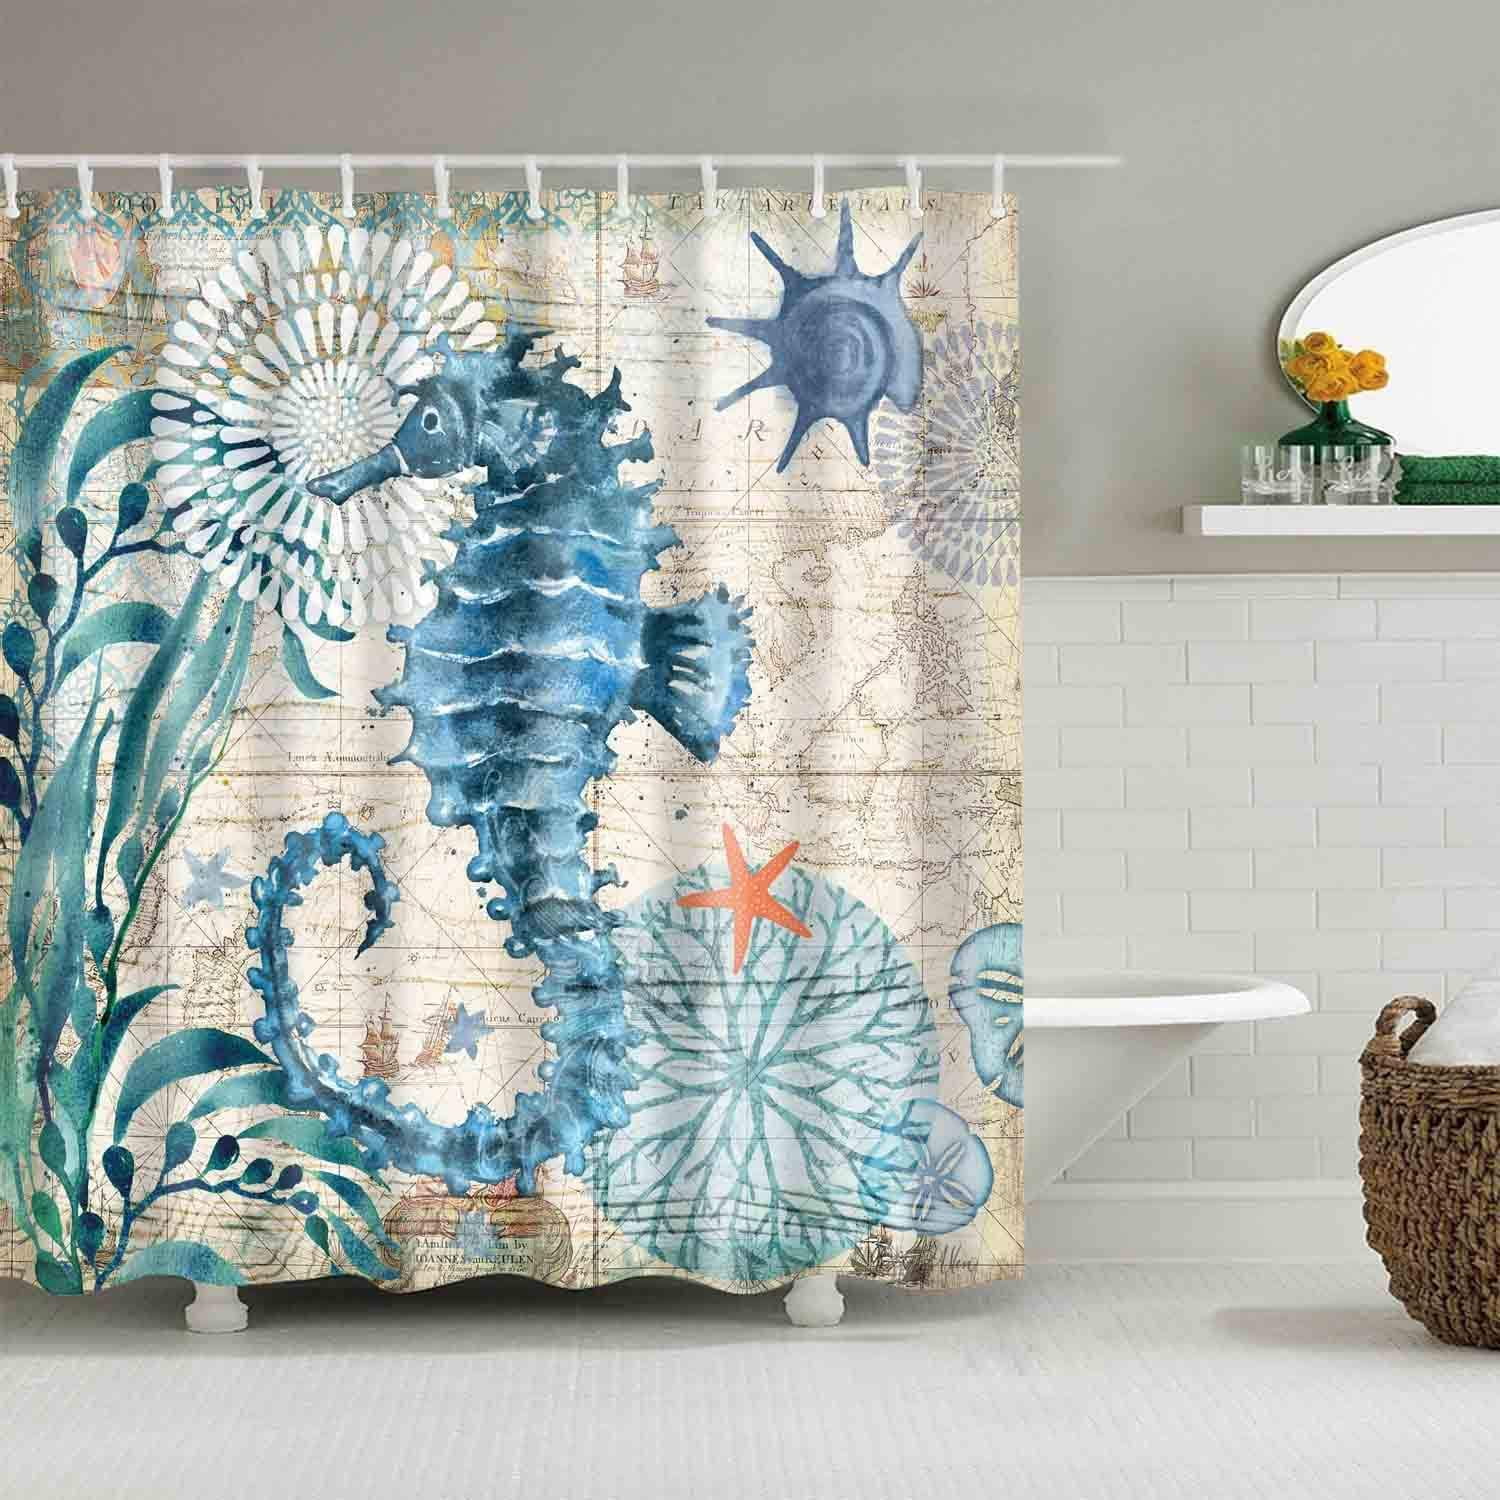 Horse and beach Shower Curtain Bathroom Waterproof Fabric & 12hooks 71*71inch 